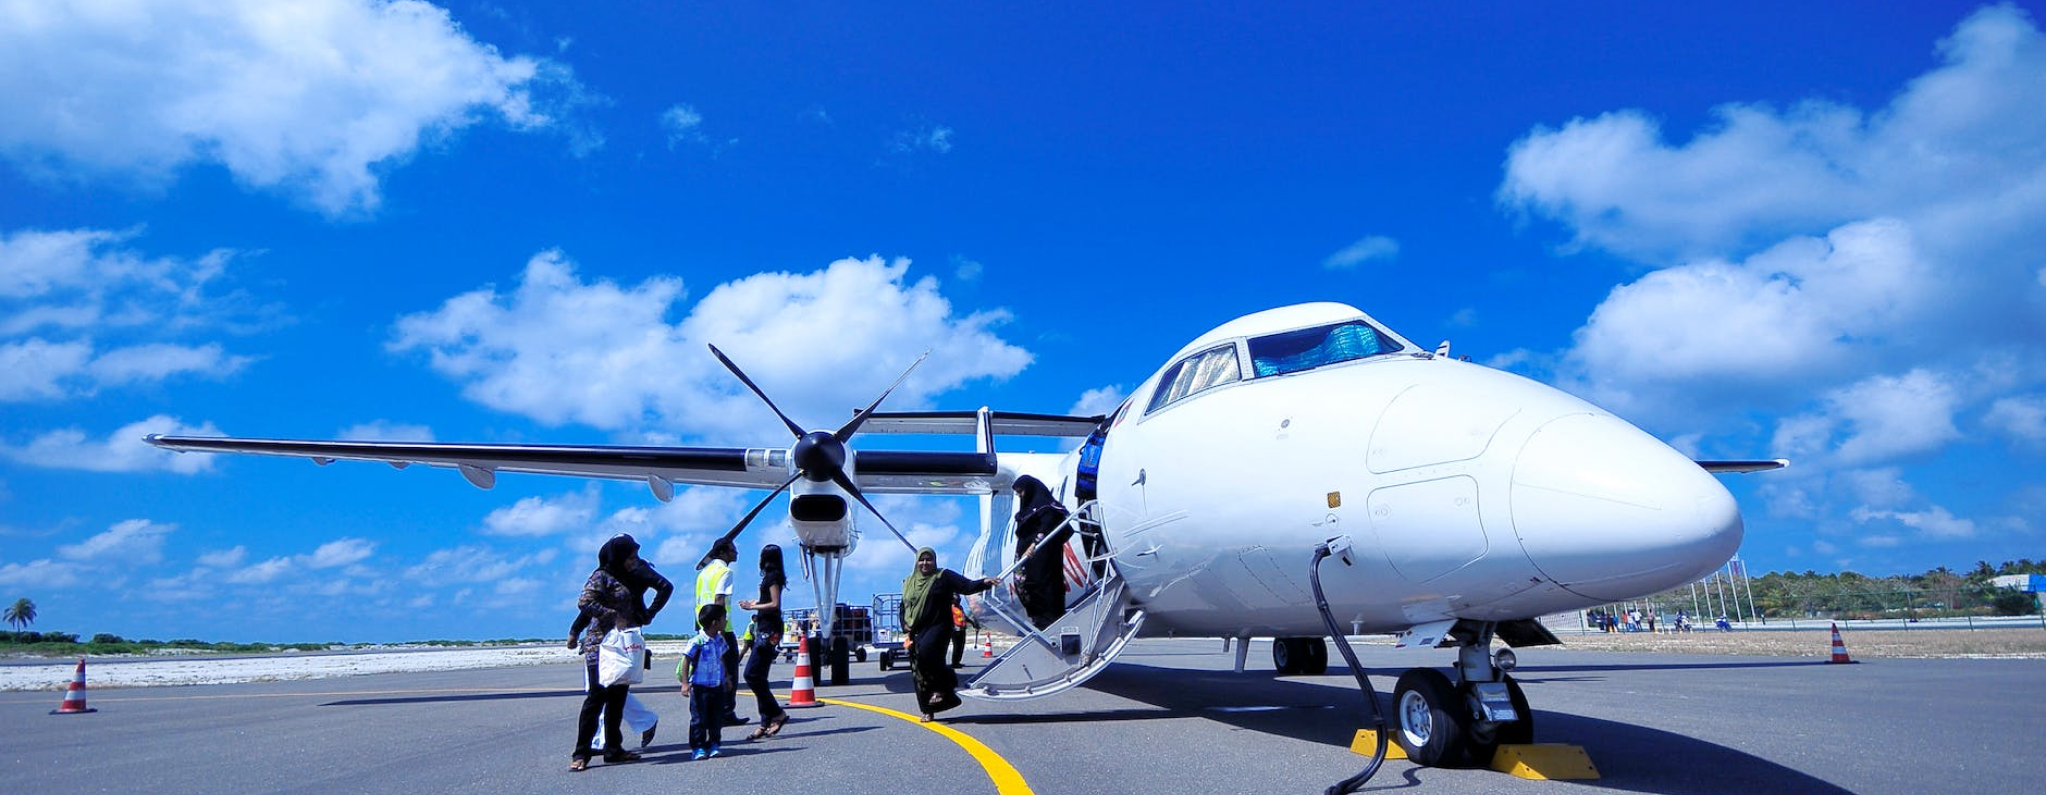 Aviation News | Aviation Magazine - Robb Report Australia & New Zealand